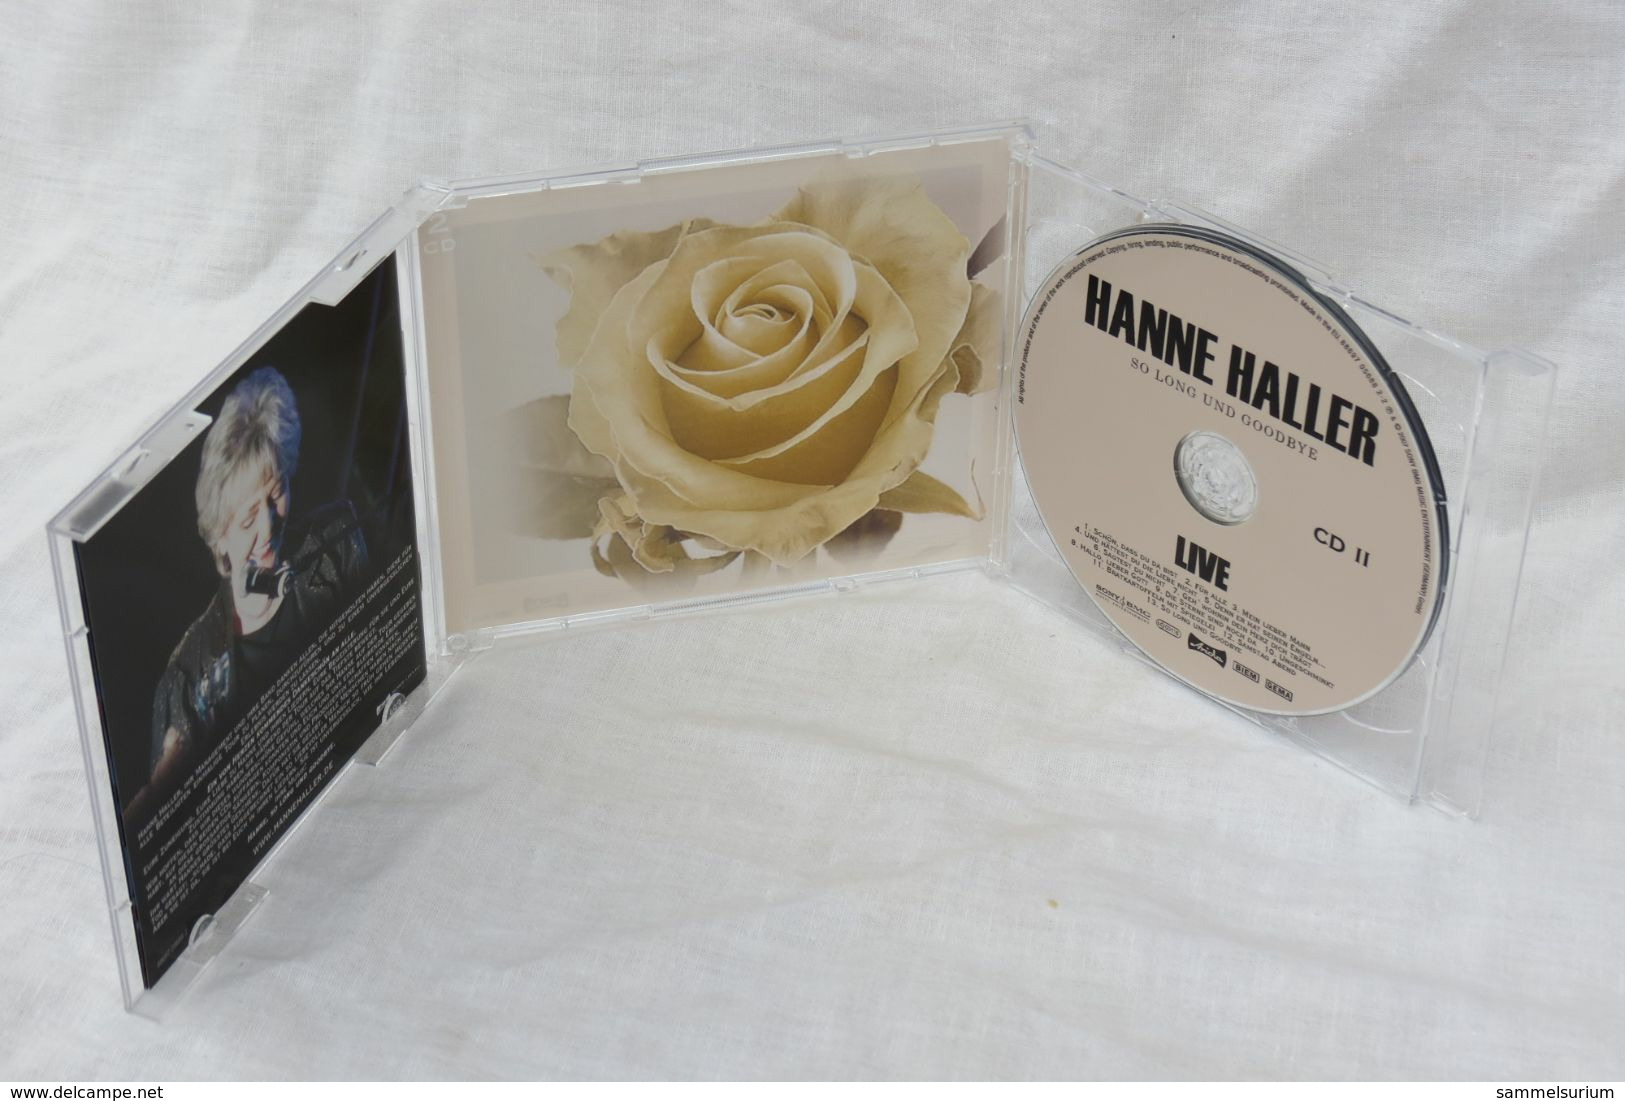 2 CDs "Hanne Haller Live" So Long Und Goodbye - Autres - Musique Allemande